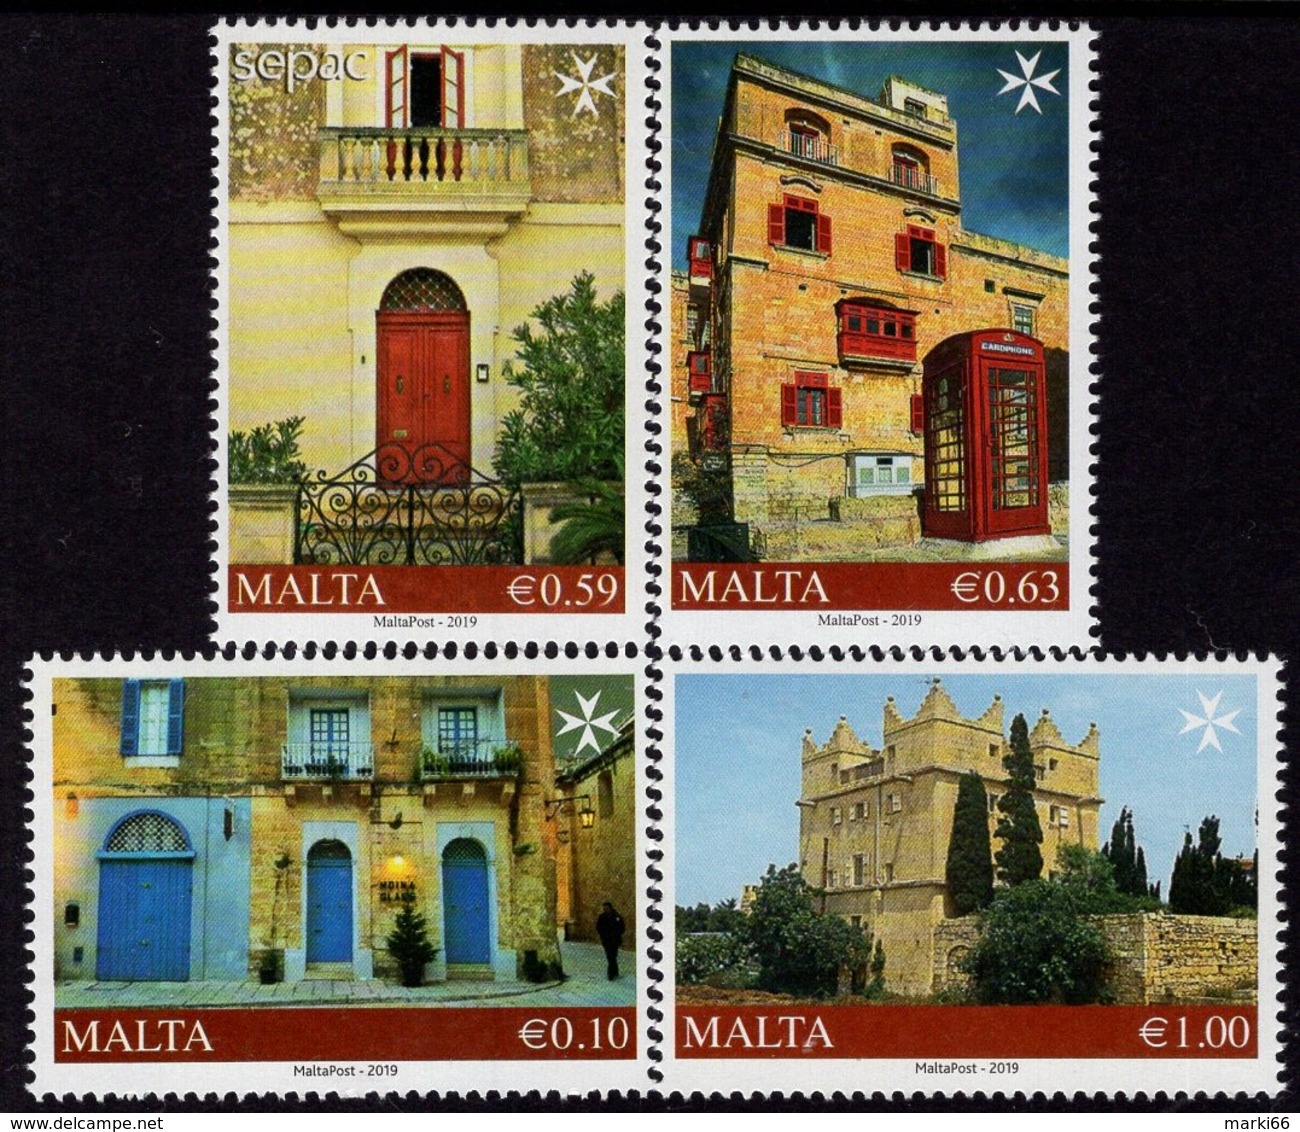 Malta - 2019 - SEPAC - Old Residential Houses - Mint Stamp Set - Malte